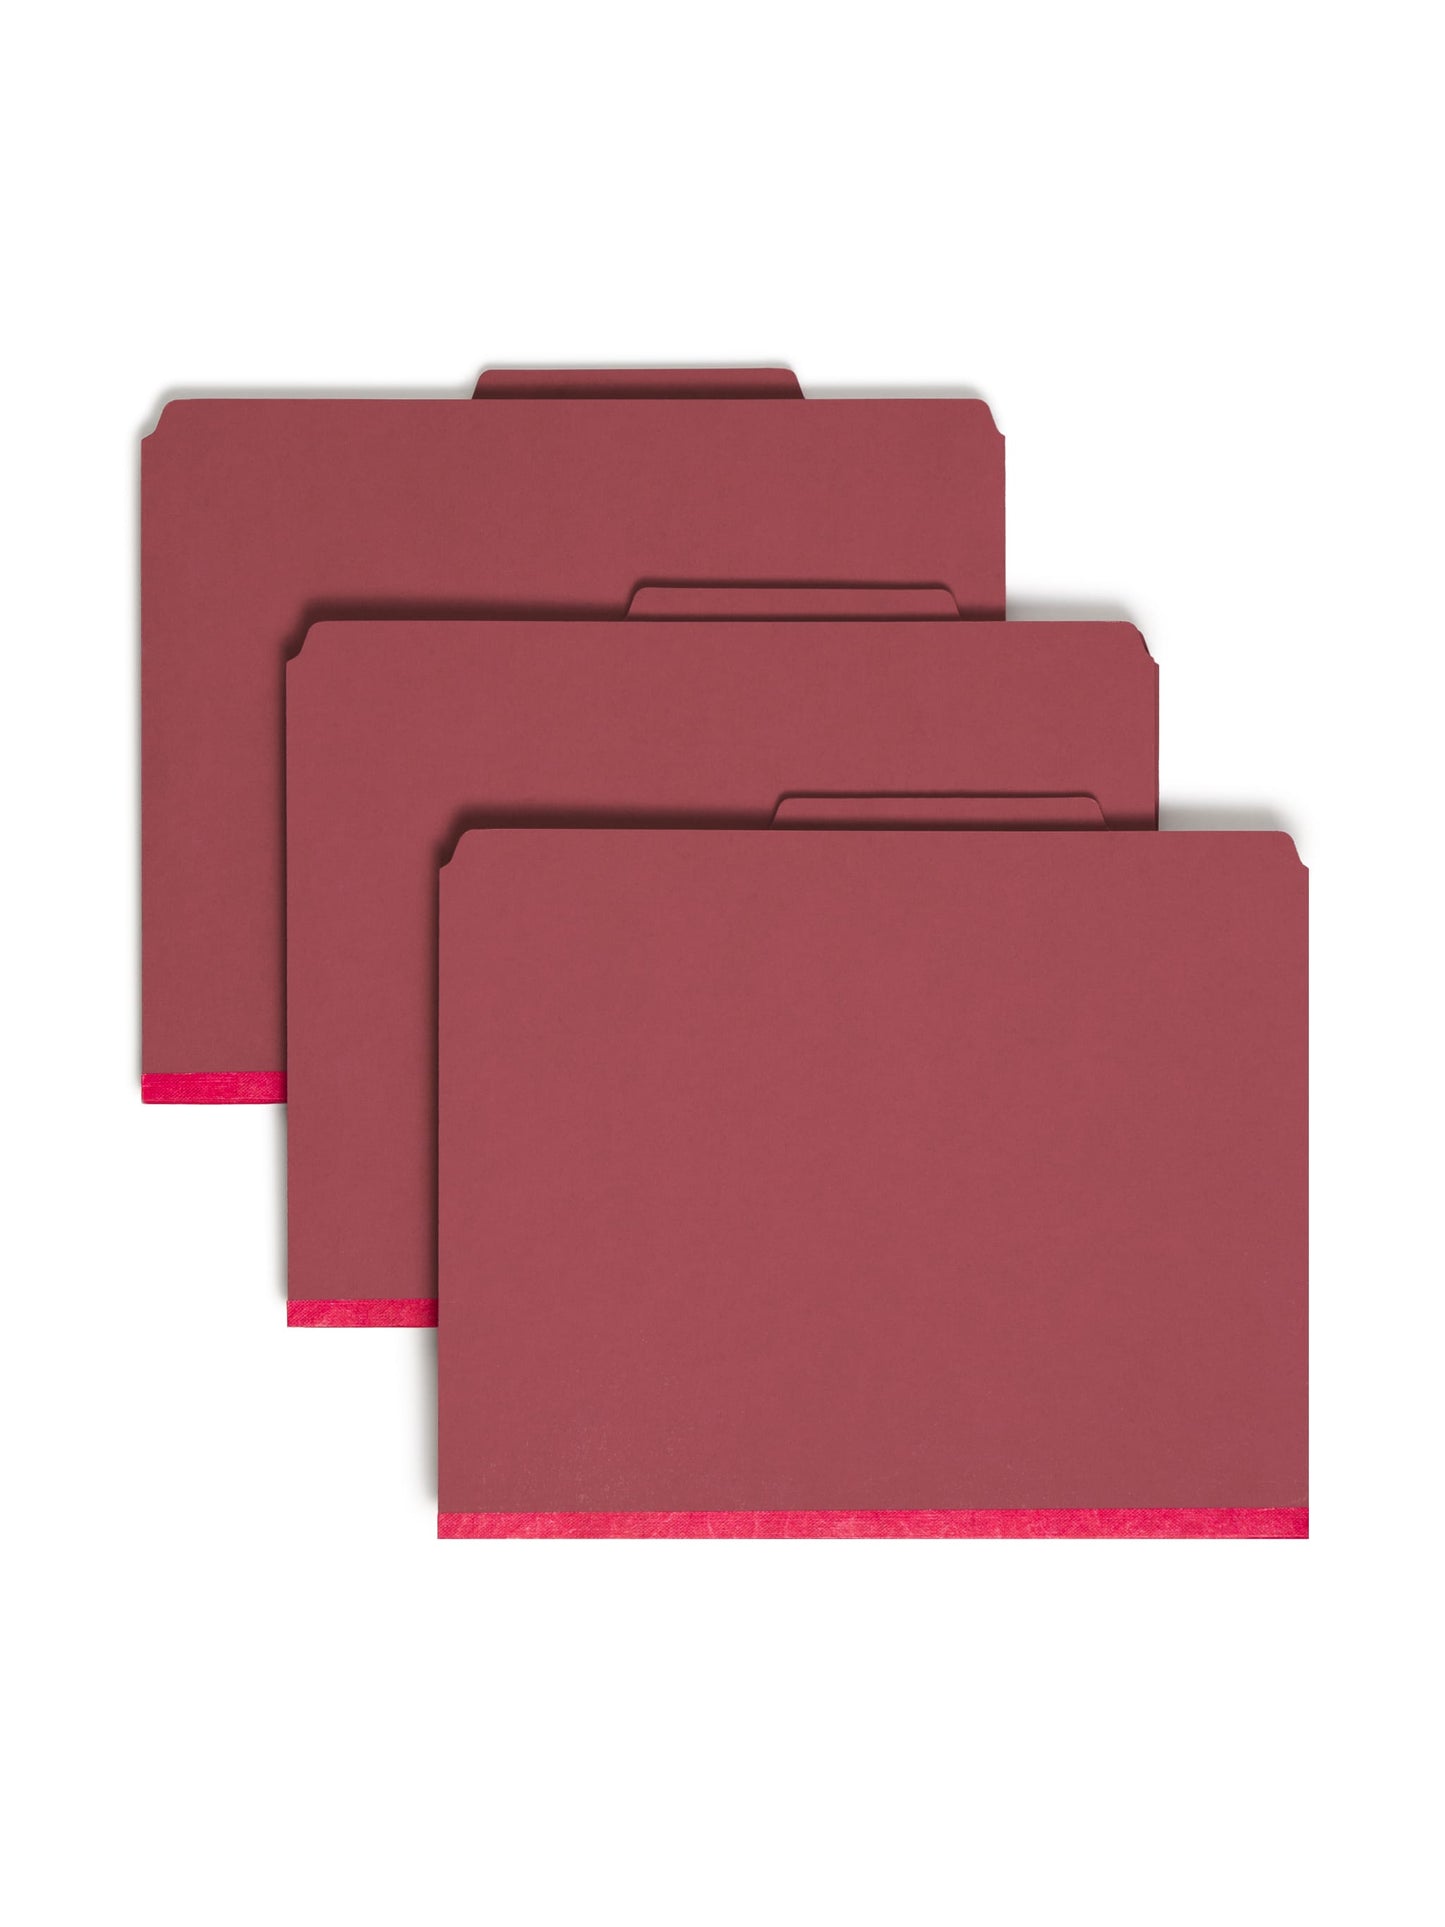 SafeSHIELD® Pressboard Classification File Folders, 1 Divider, 2 inch Expansion, Bright Red Color, Letter Size, Set of 0, 30086486137318